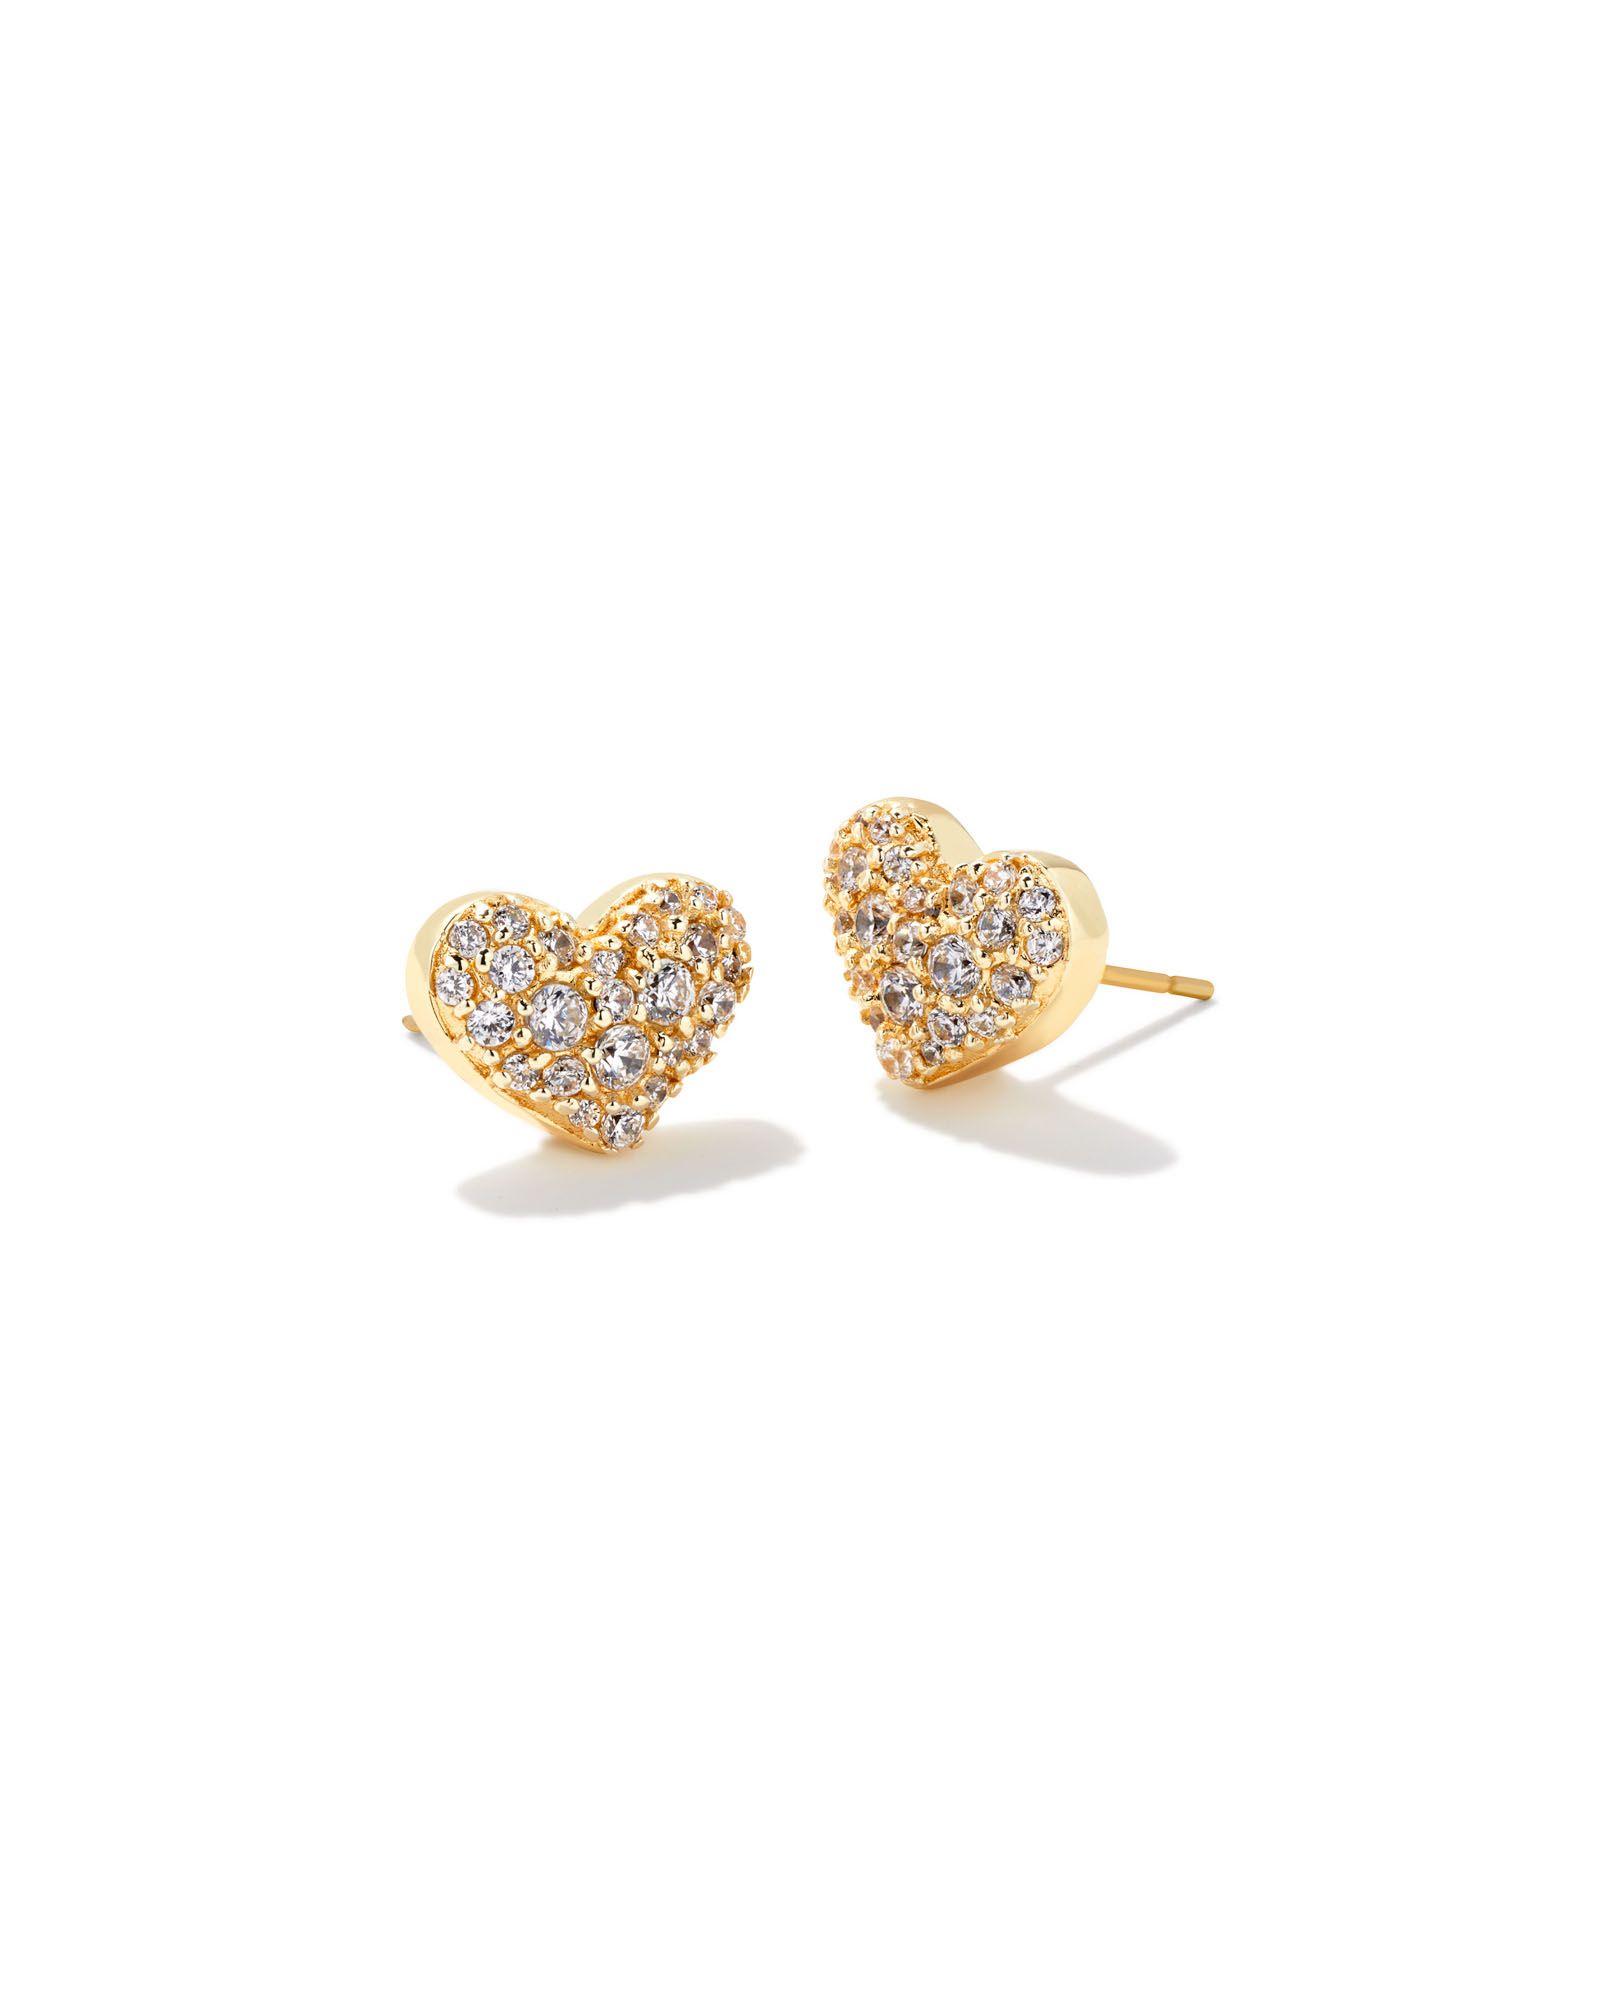 Ari Gold Pave Crystal Heart Earrings in White Crystal | Kendra Scott | Kendra Scott